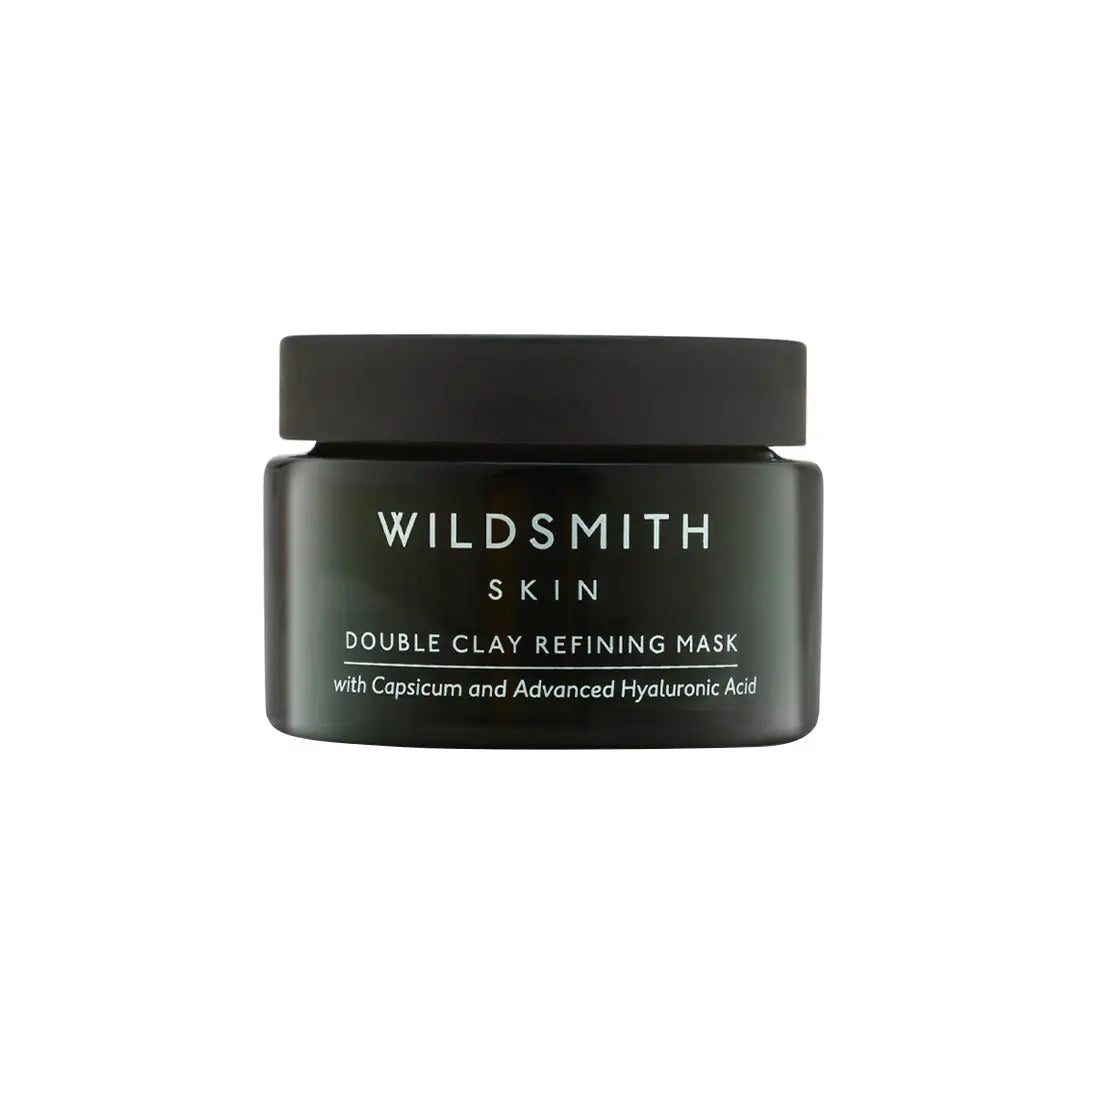 Wildsmith Skin Double Clay Refining Mask 50ml - Free 